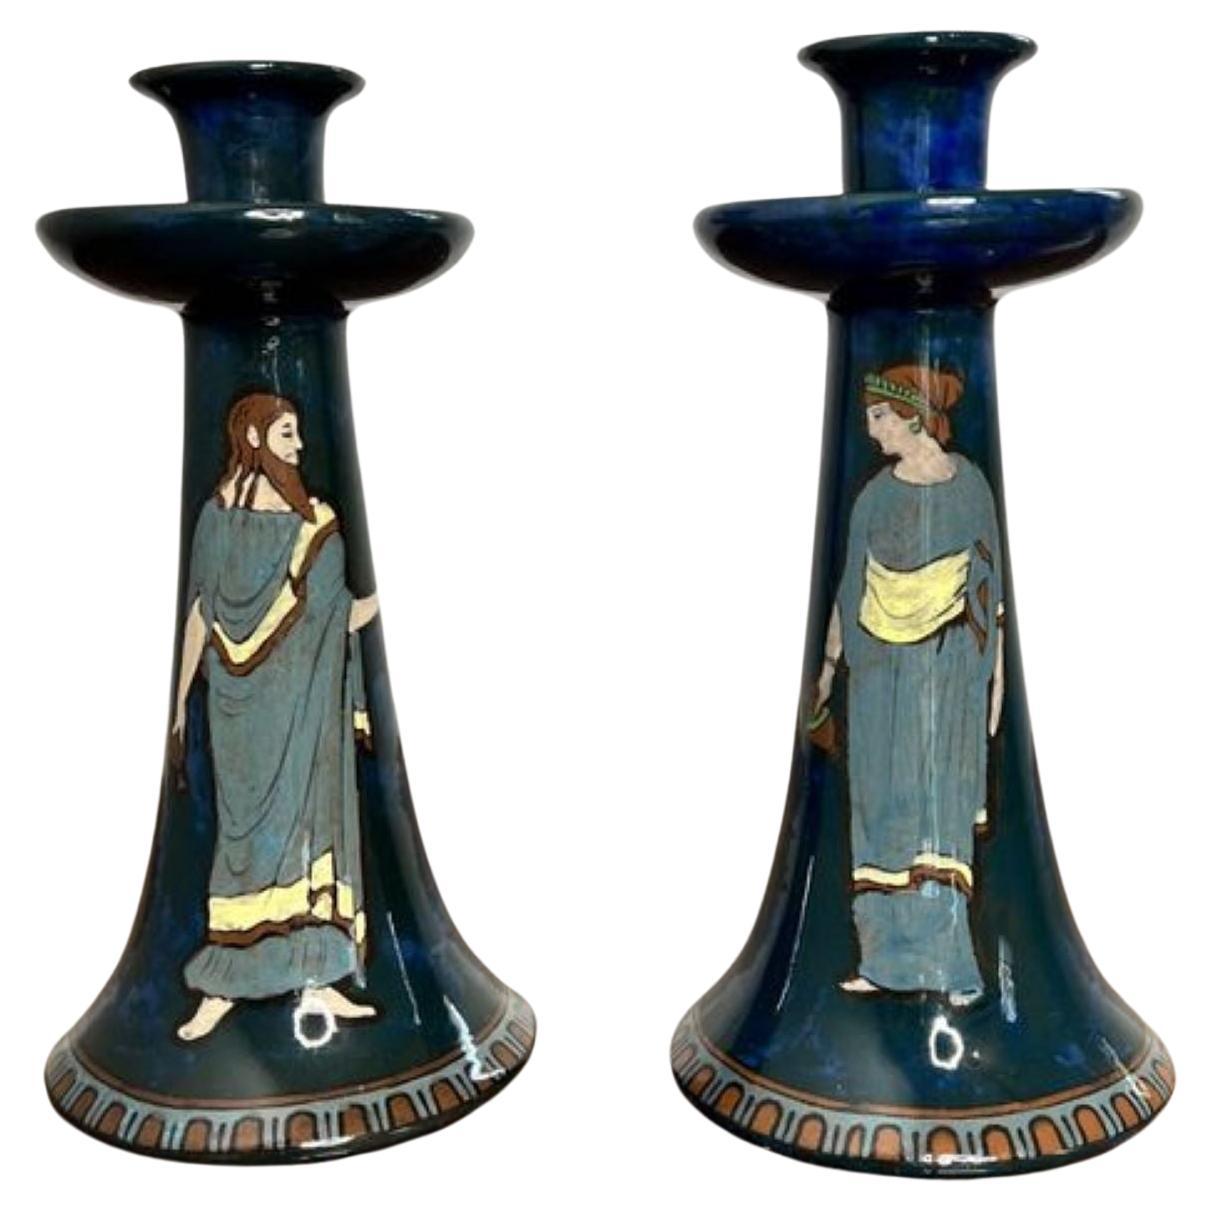 Wonderful pair of antique Decoro England candlesticks 